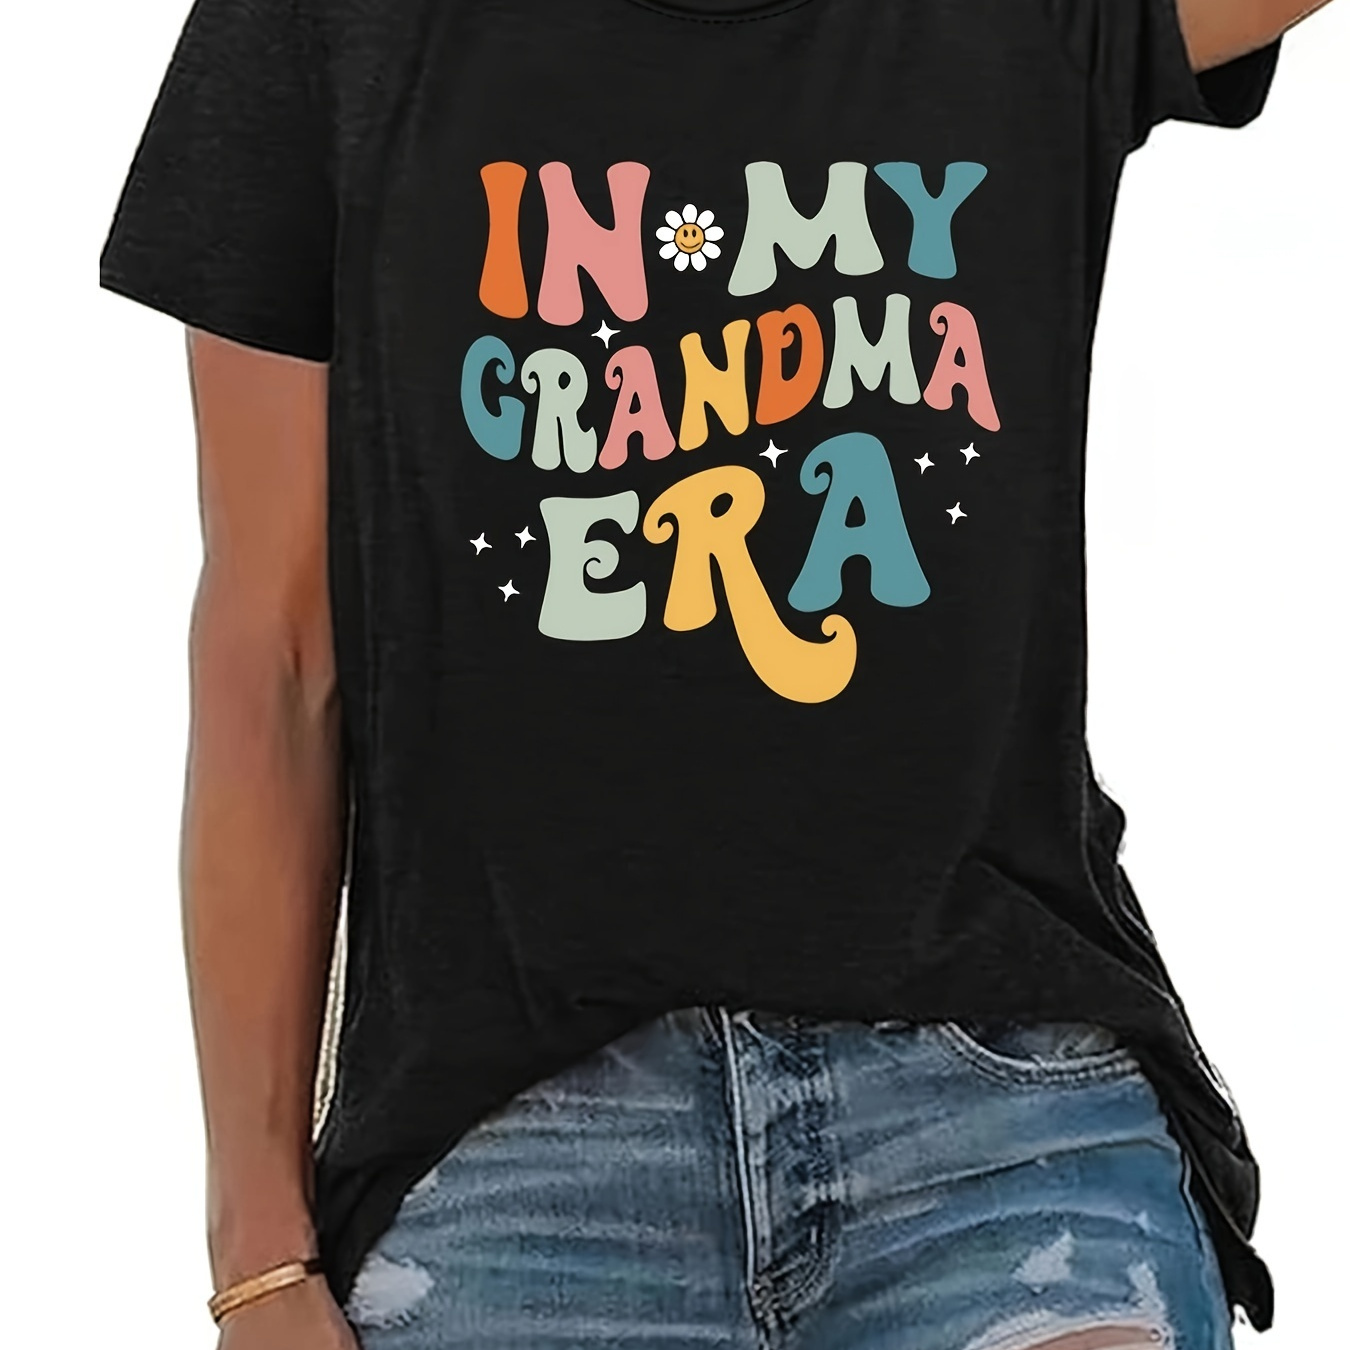 

Grandma Era Print Crew Neck T-shirt, Short Sleeve Casual Top For Summer & Spring, Women's Clothing